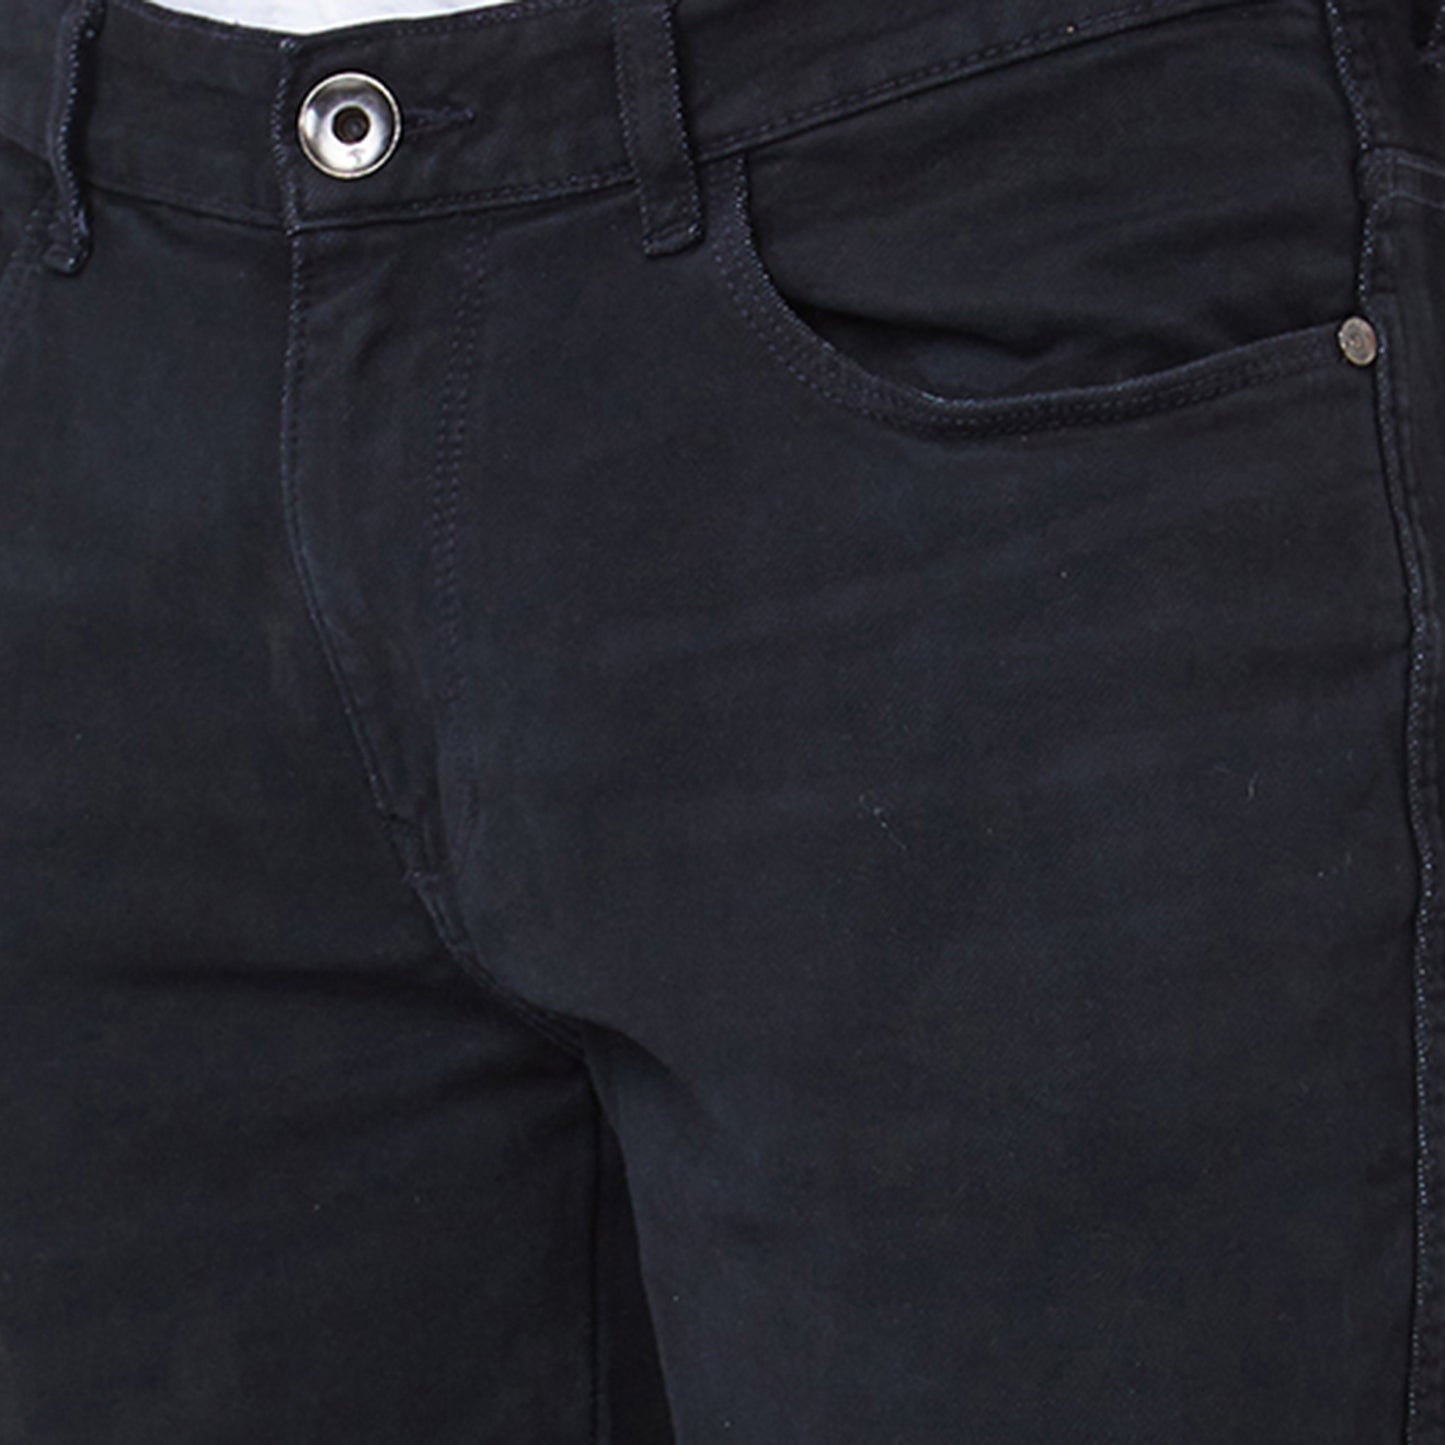 Men's Casual Denim Regular Fit Stretch Jeans